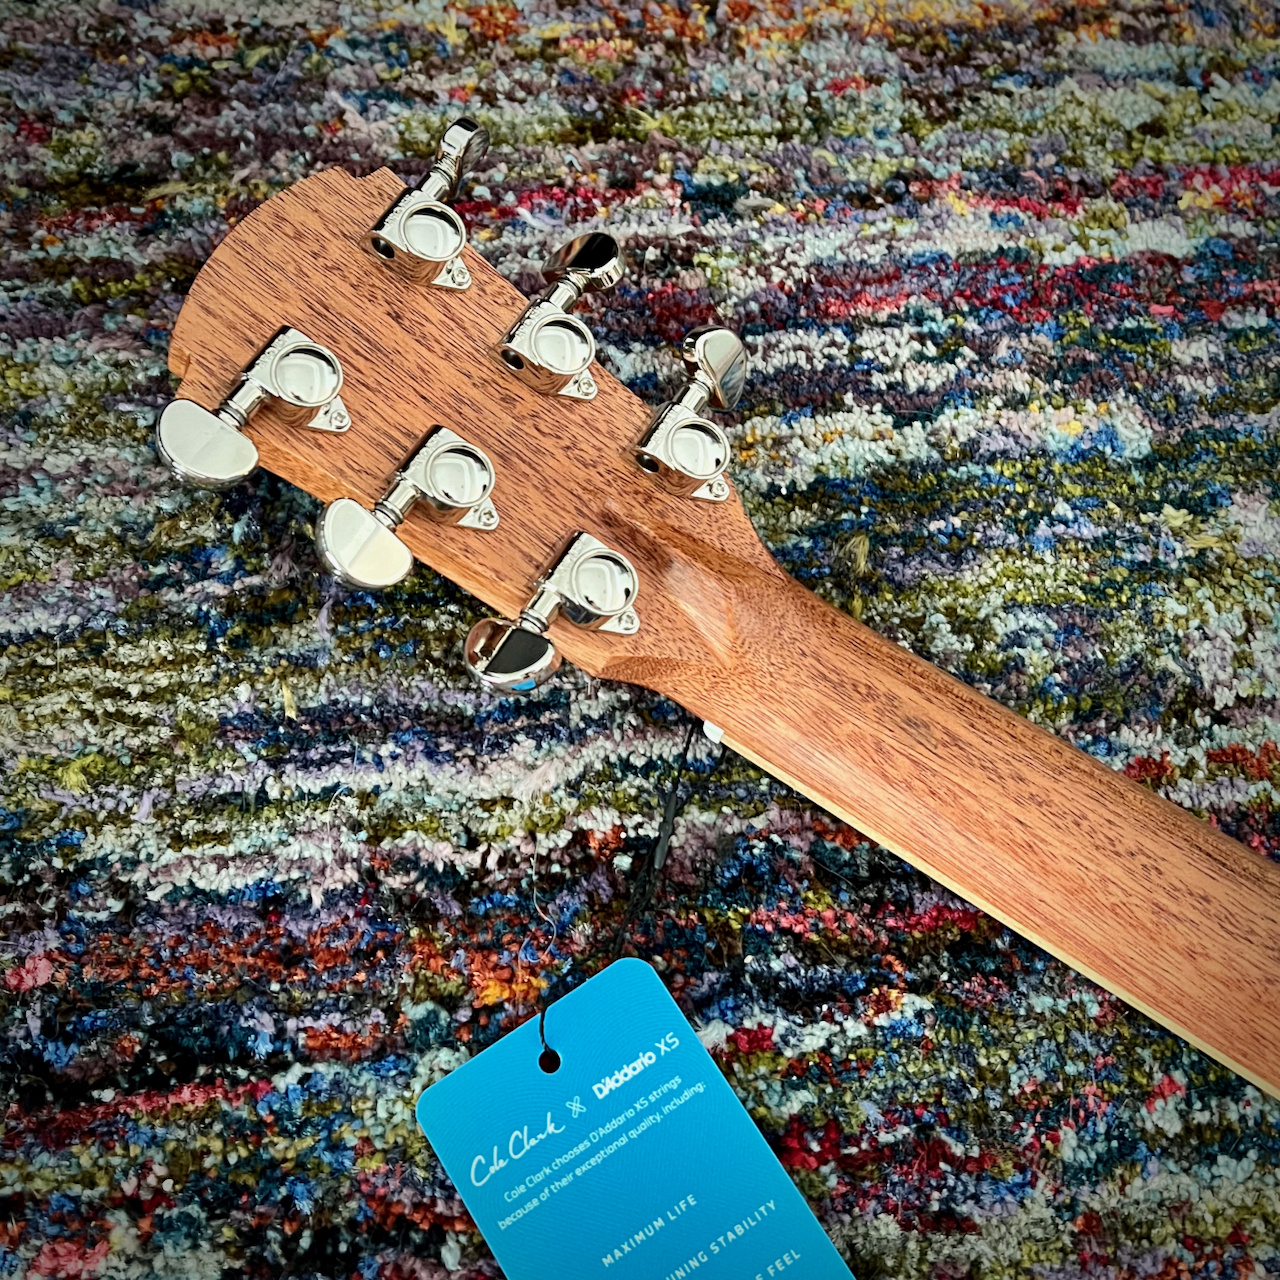 Cole Clark Studio Grand Auditorium Acoustic Guitar - All Australian Redwood Top with Queensland Maple Body (SAN1EC-RDM)